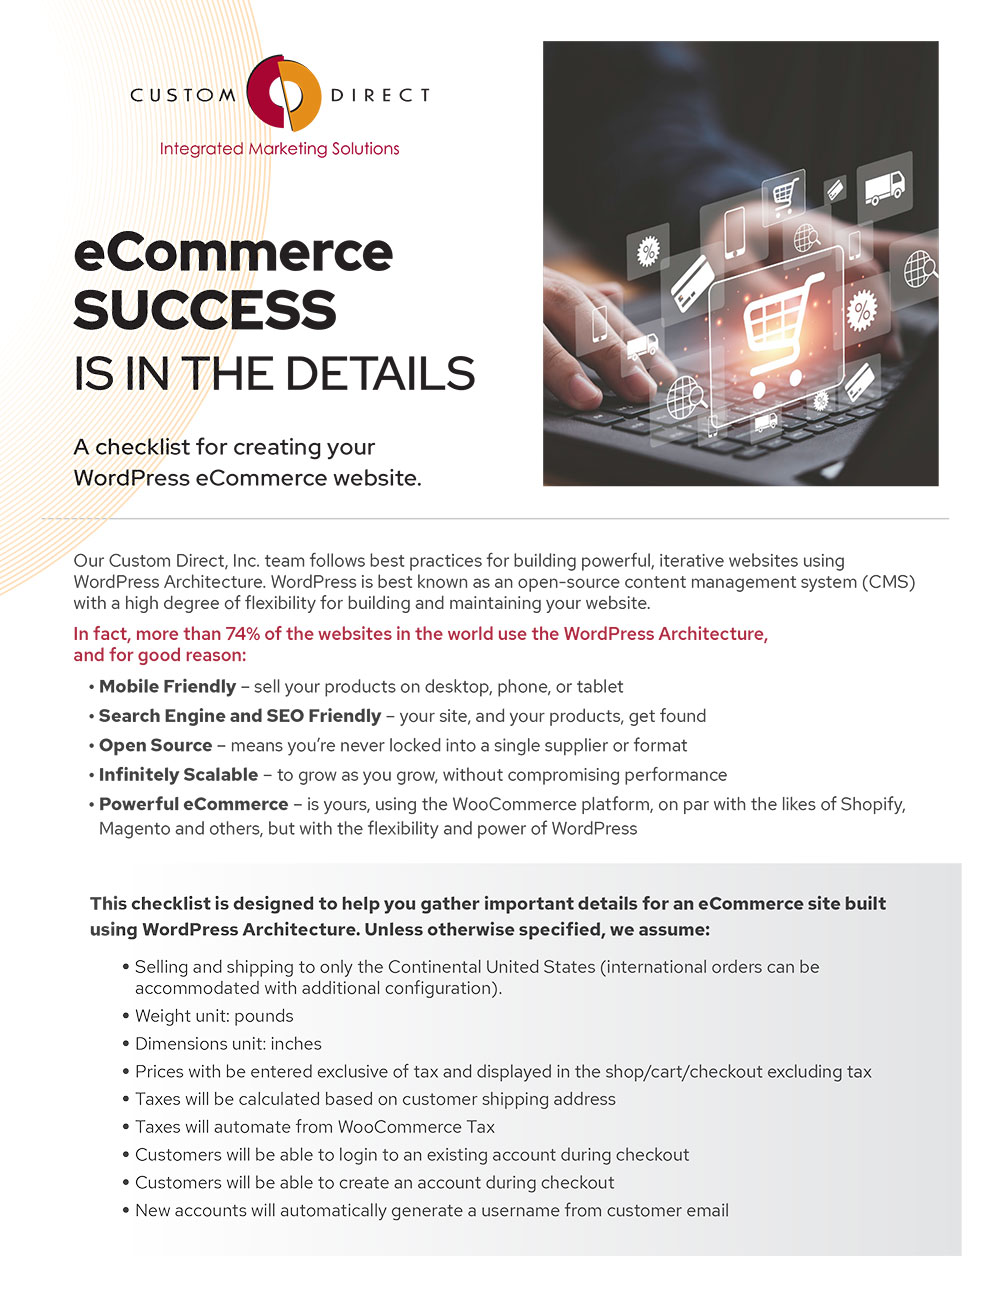 CDI eCommerce Website Checklist